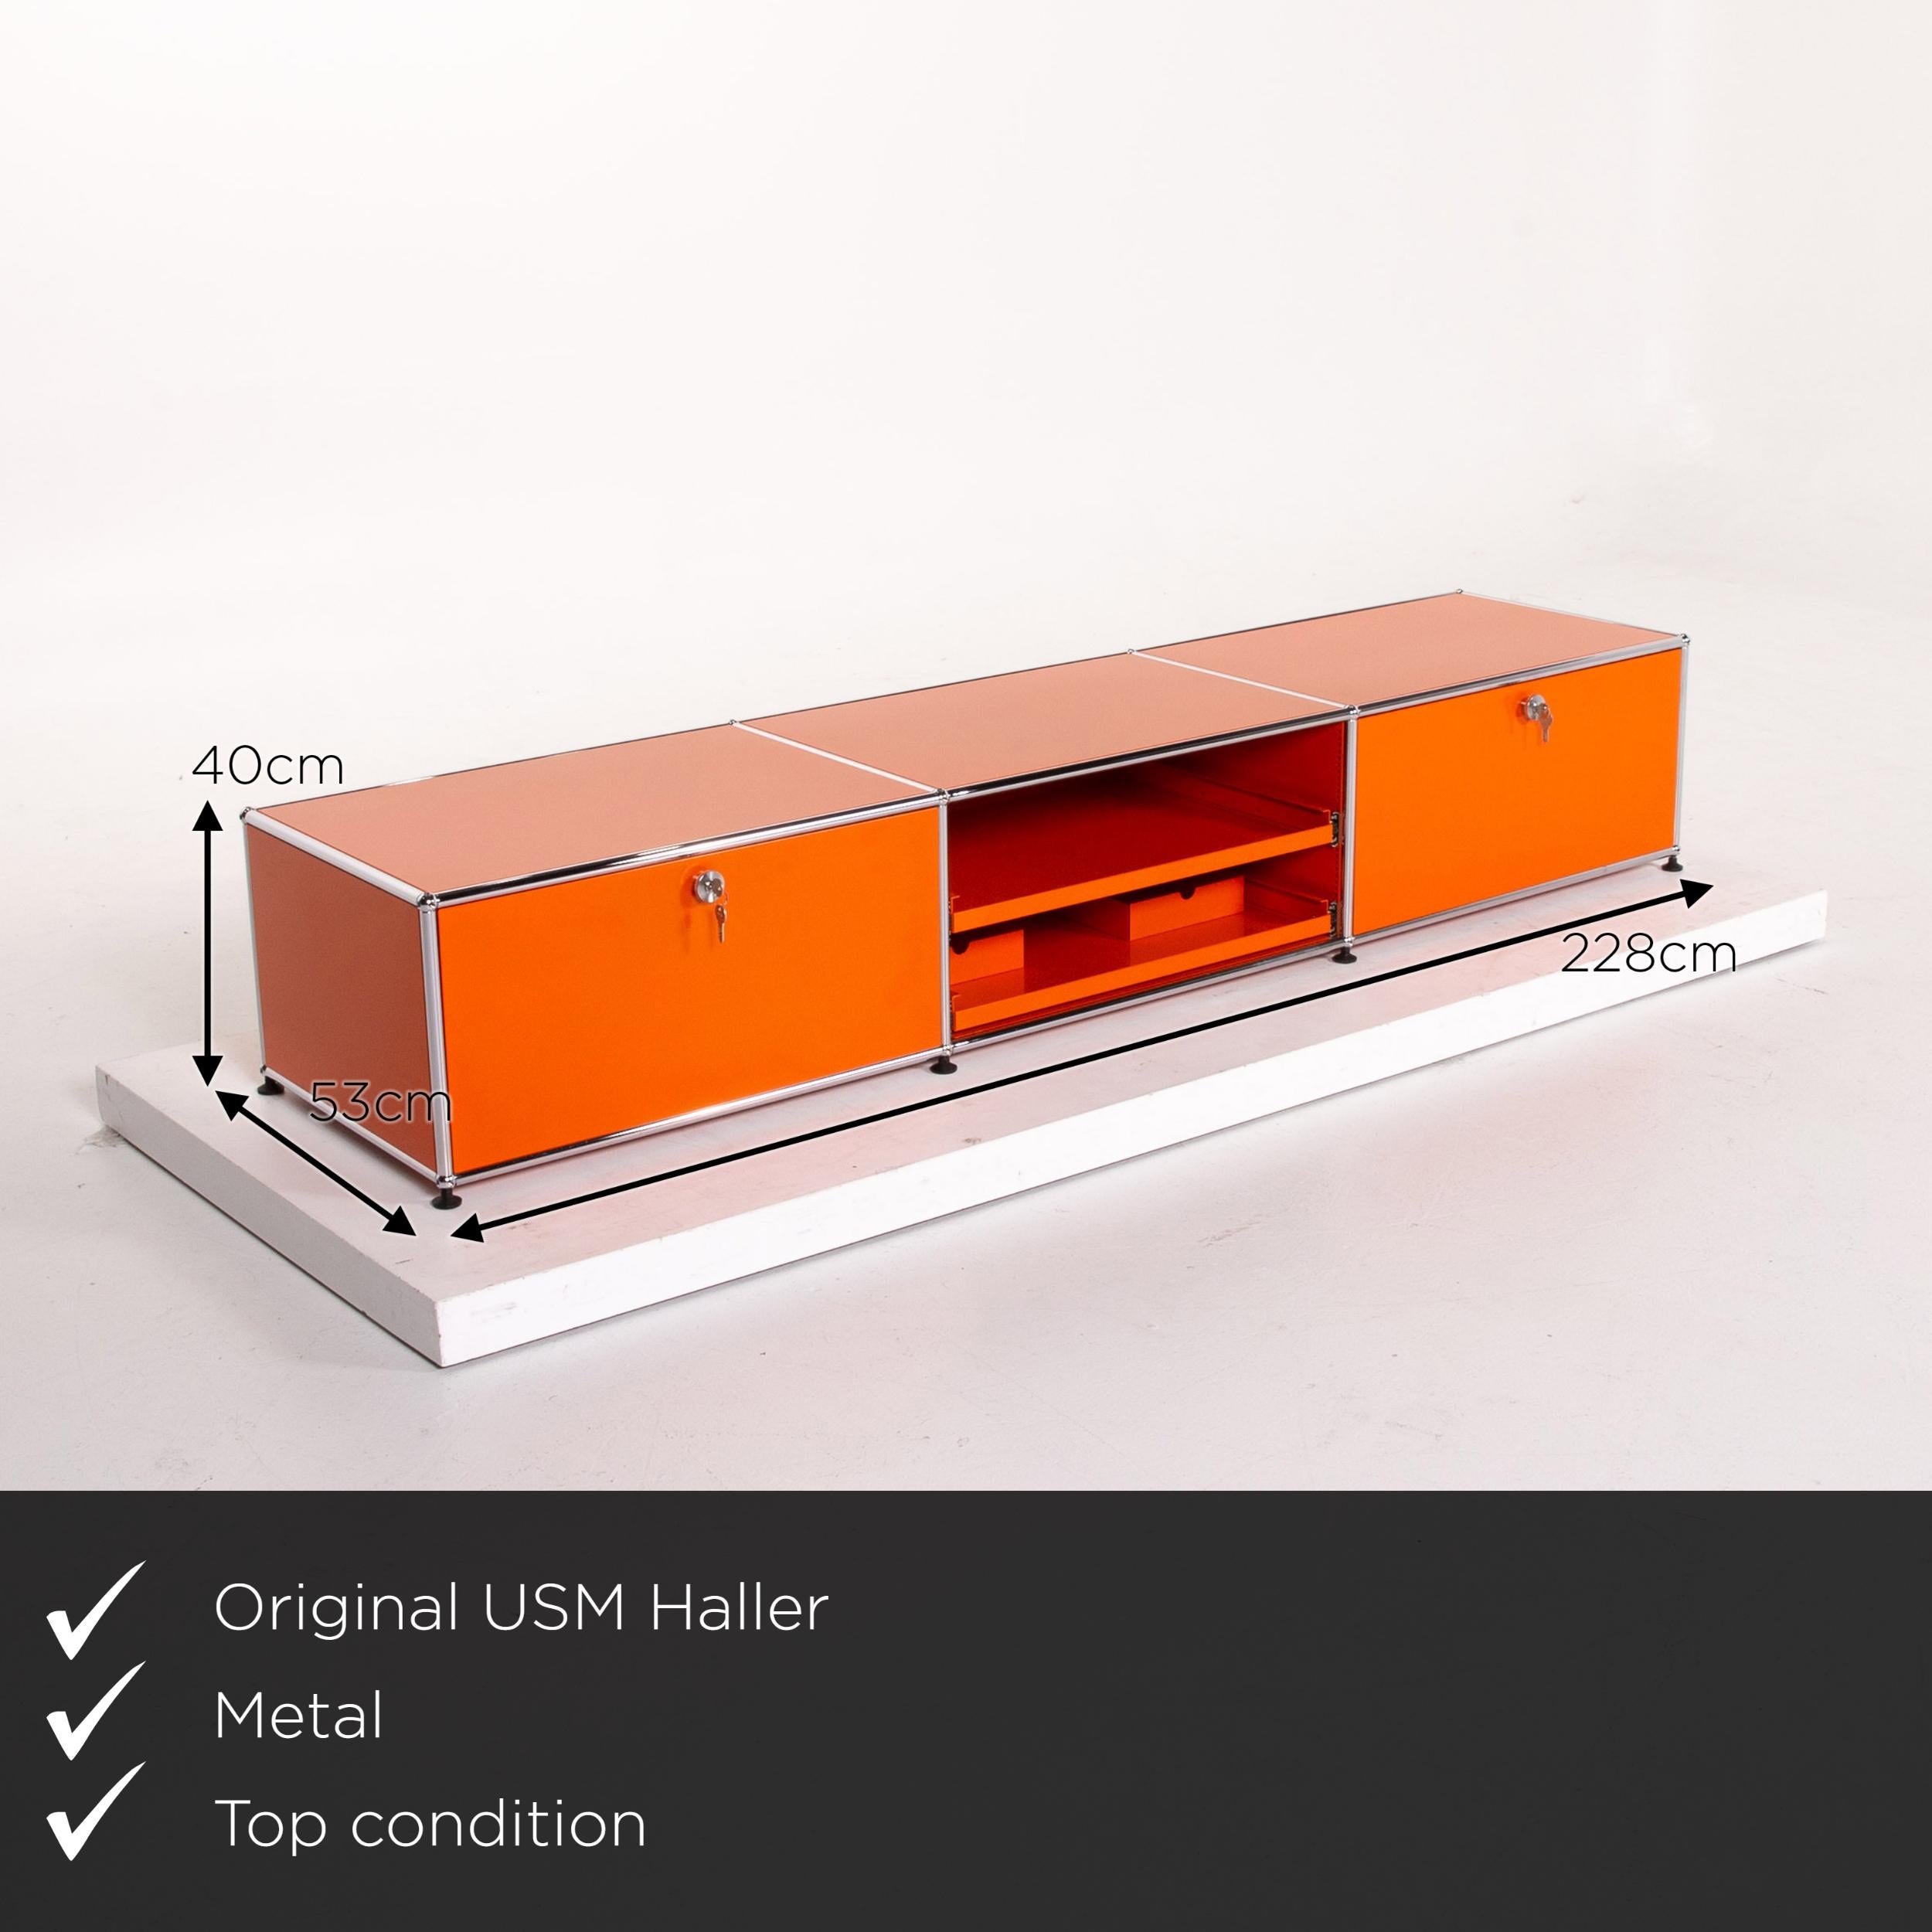 We present to you an Usm Haller metal sideboard orange office furniture shelf modular.

 

 Product measurements in centimeters:
 

Depth 53
Width 228
Height 40.





       